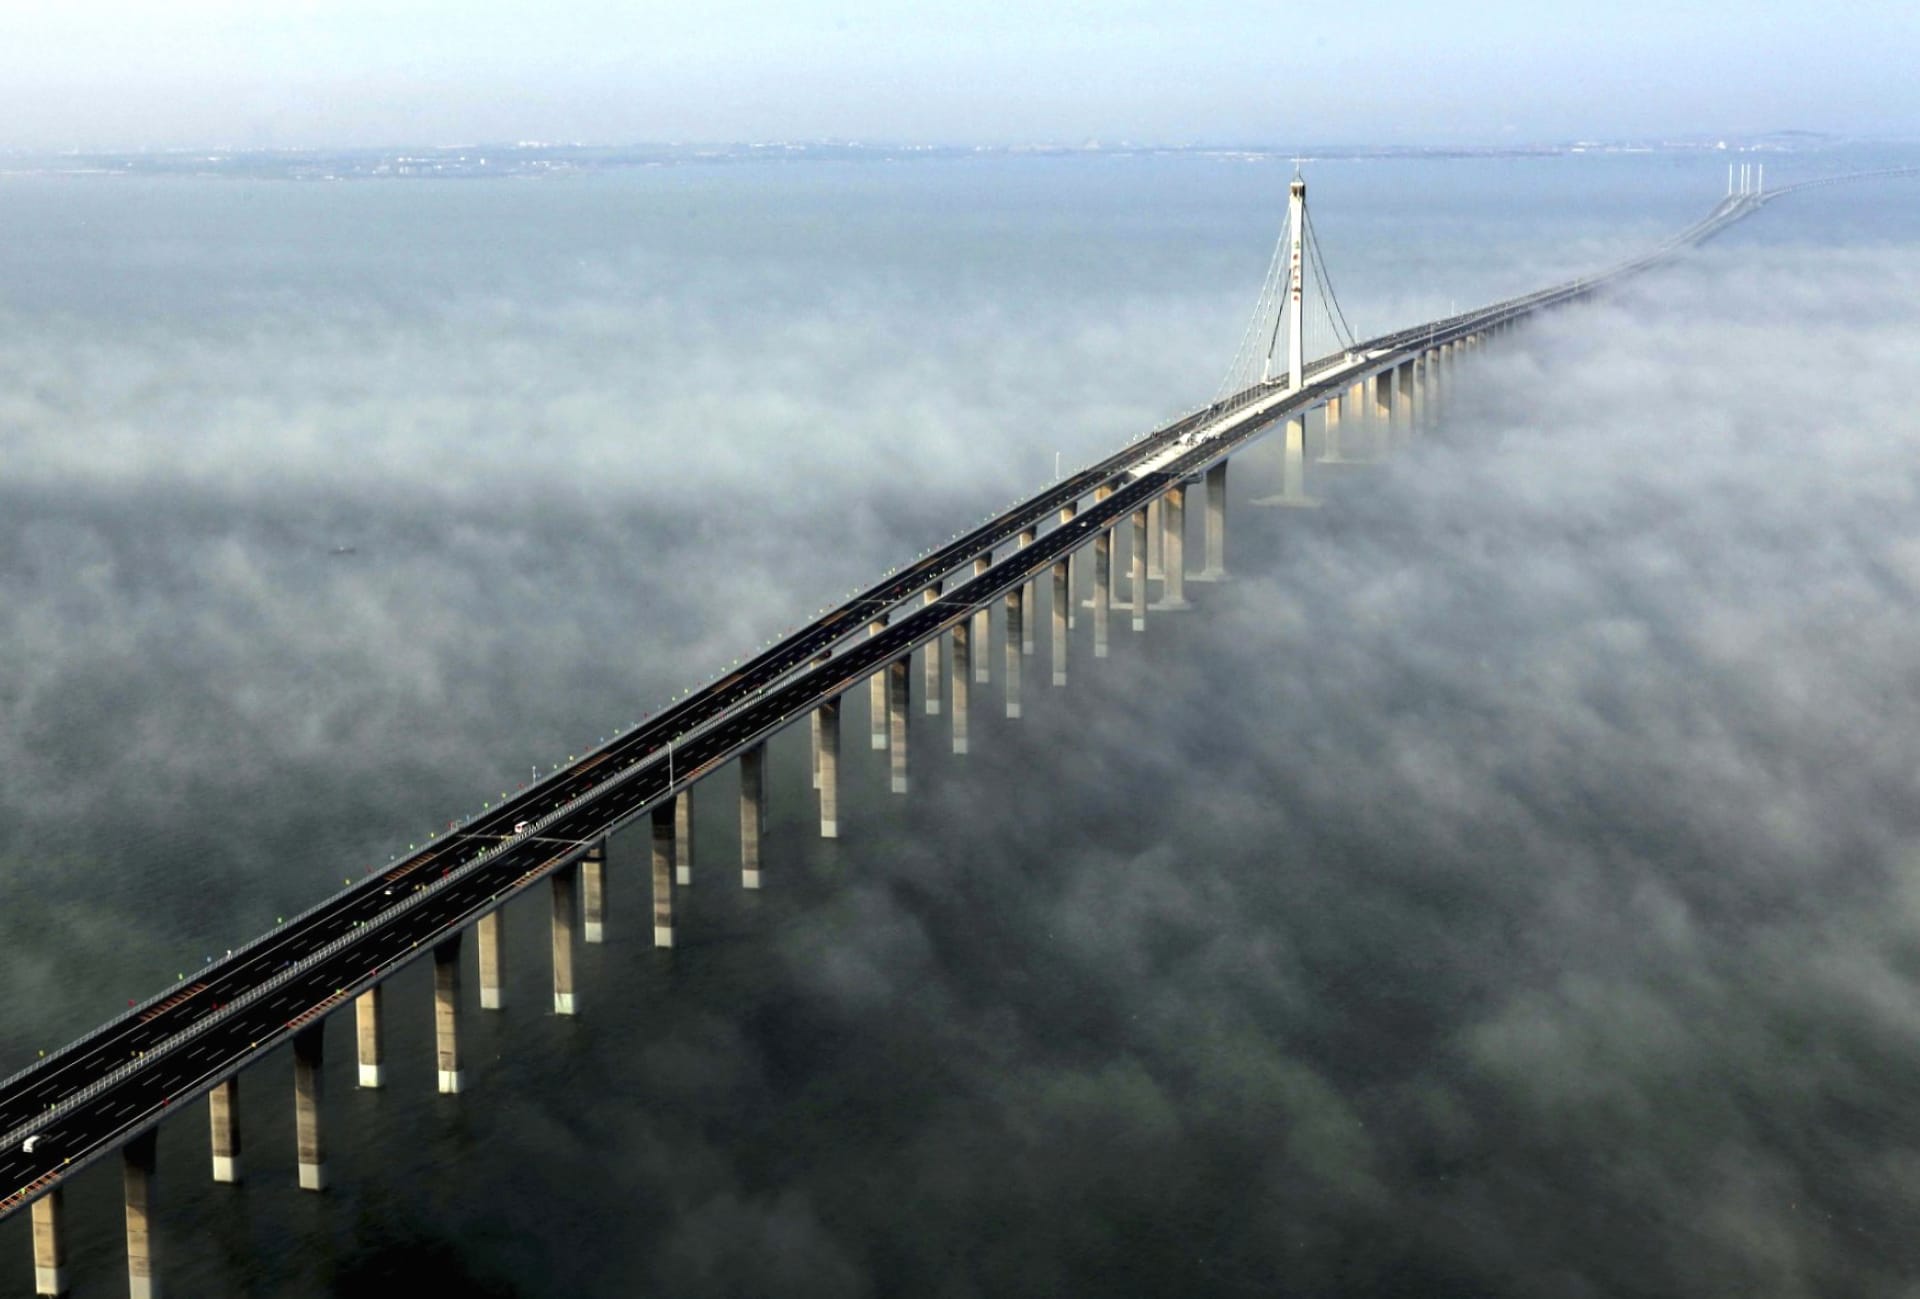 Jiaozhou Bay Bridge at 1024 x 1024 iPad size wallpapers HD quality